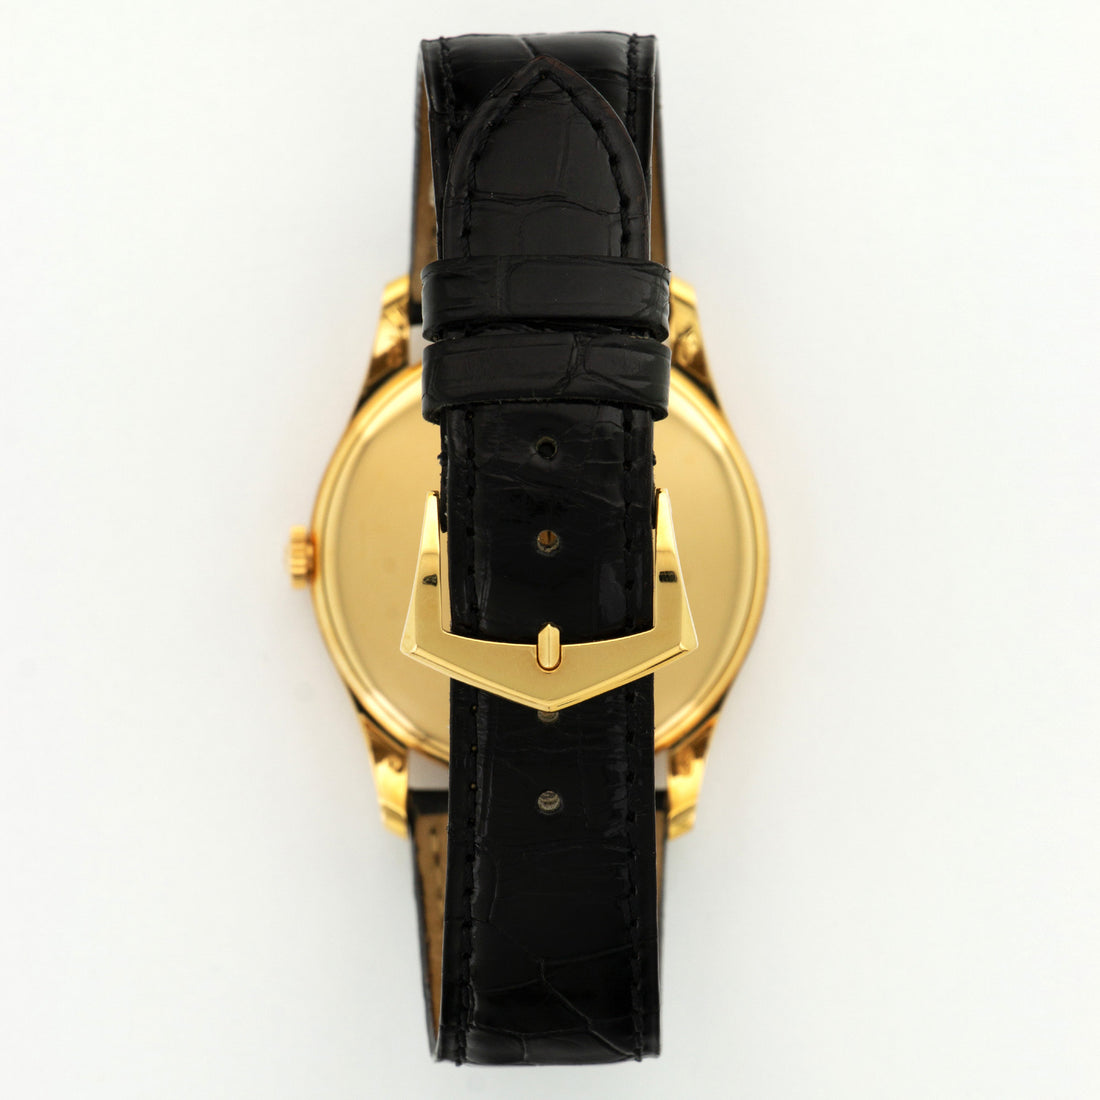 Patek Philippe Yellow Gold Calatrava Watch Ref. 5196